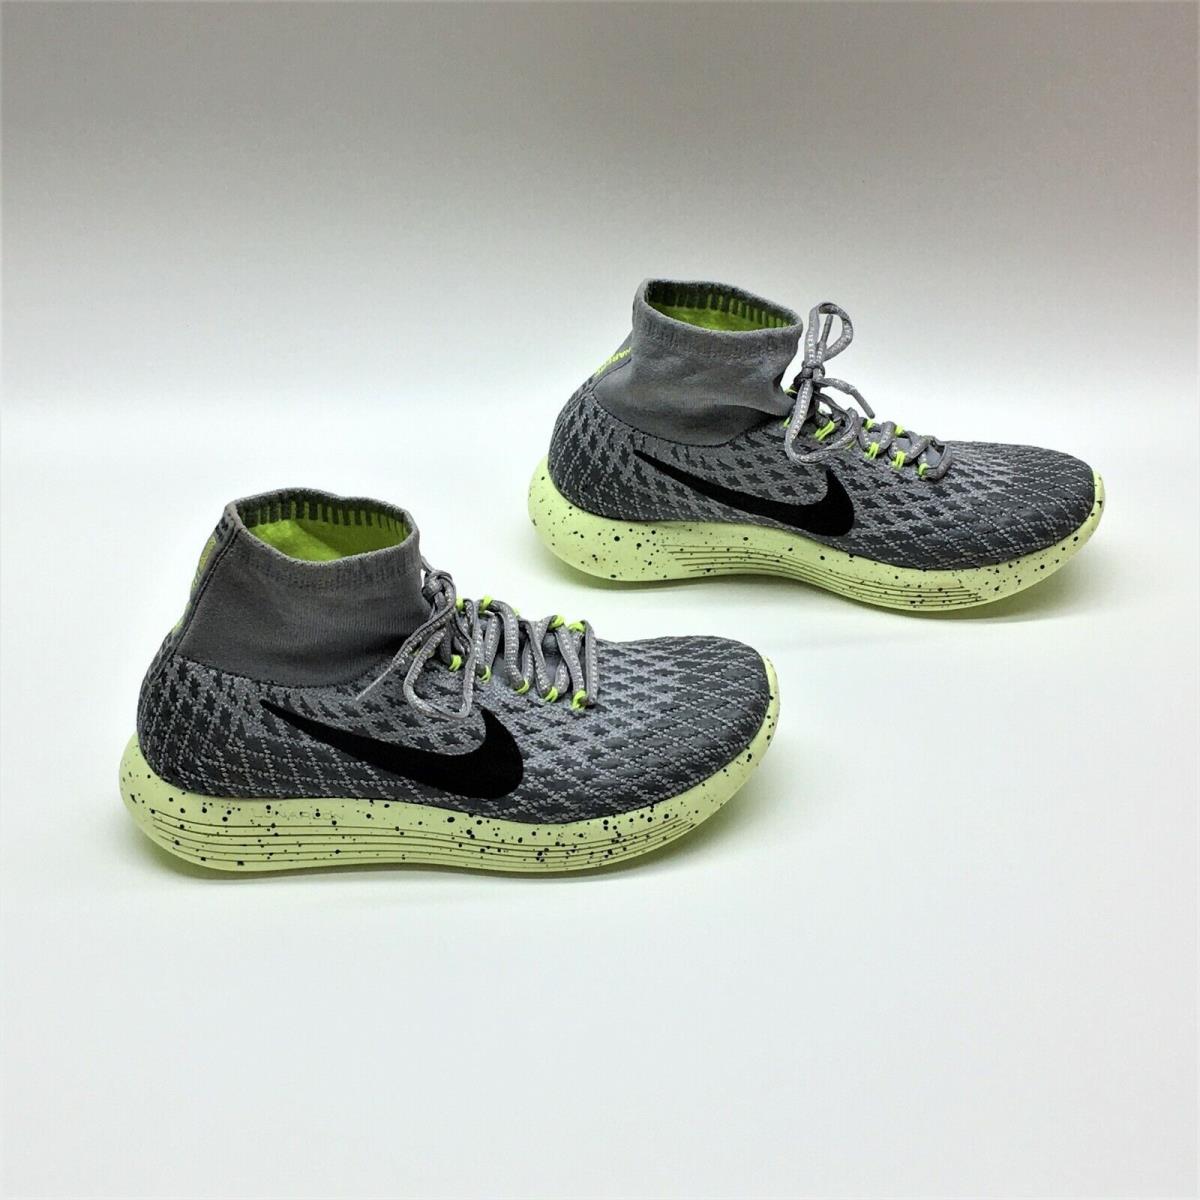 Nike Lunarepic Flyknit Shield 849665 002 Gray Running Sneakers Shoes Womens 7